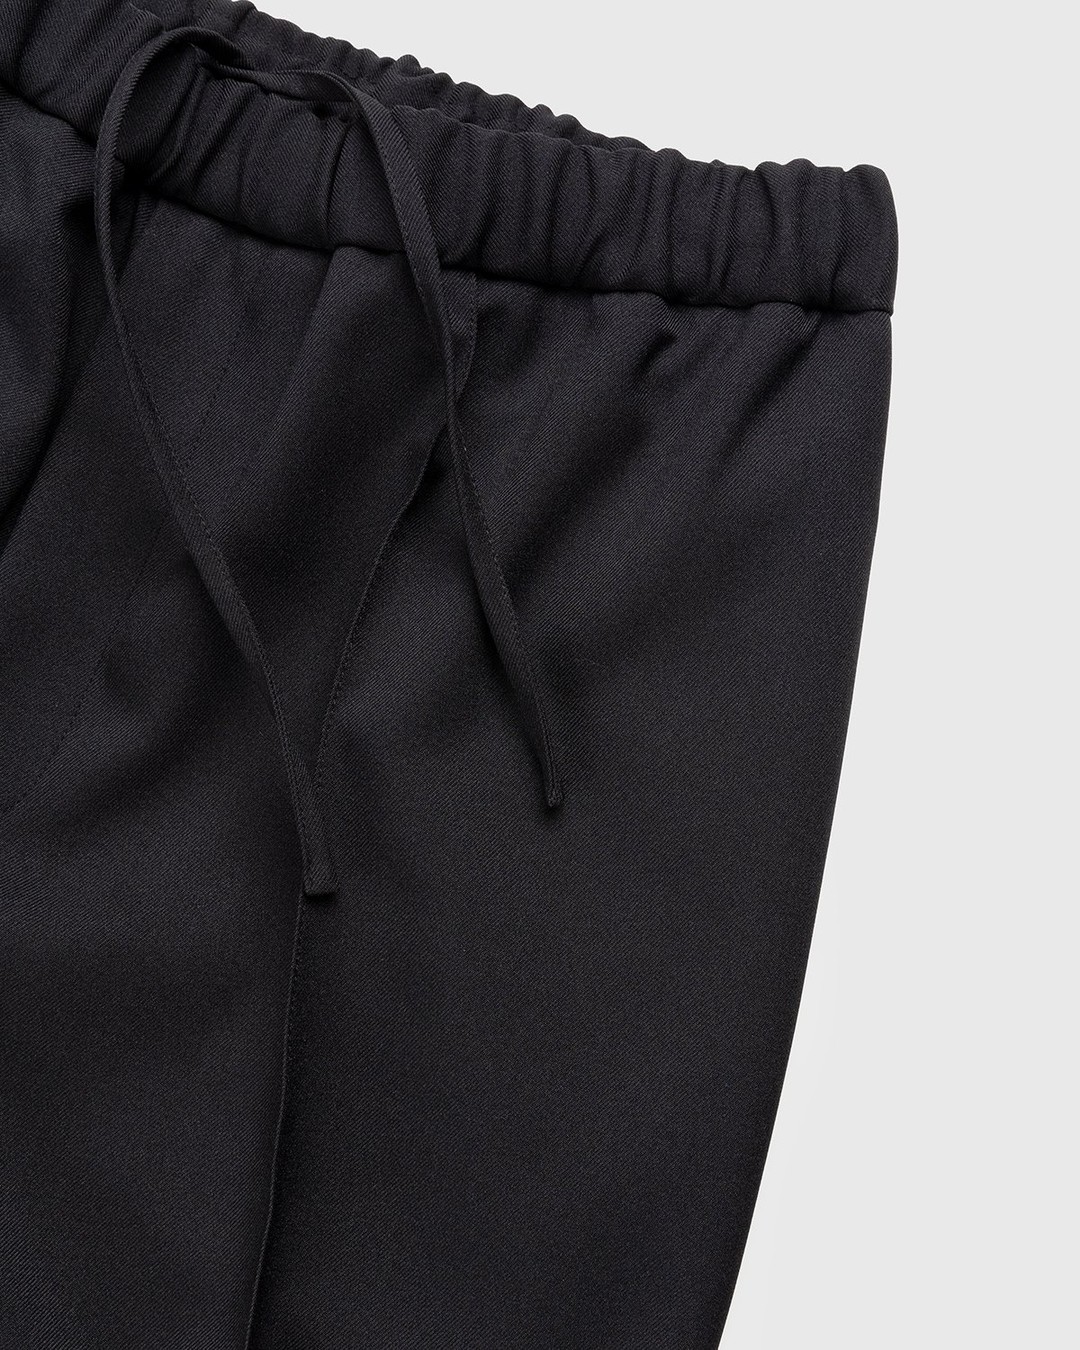 Jil Sander – Trouser D 09 AW 20 Black - Pants - Black - Image 6